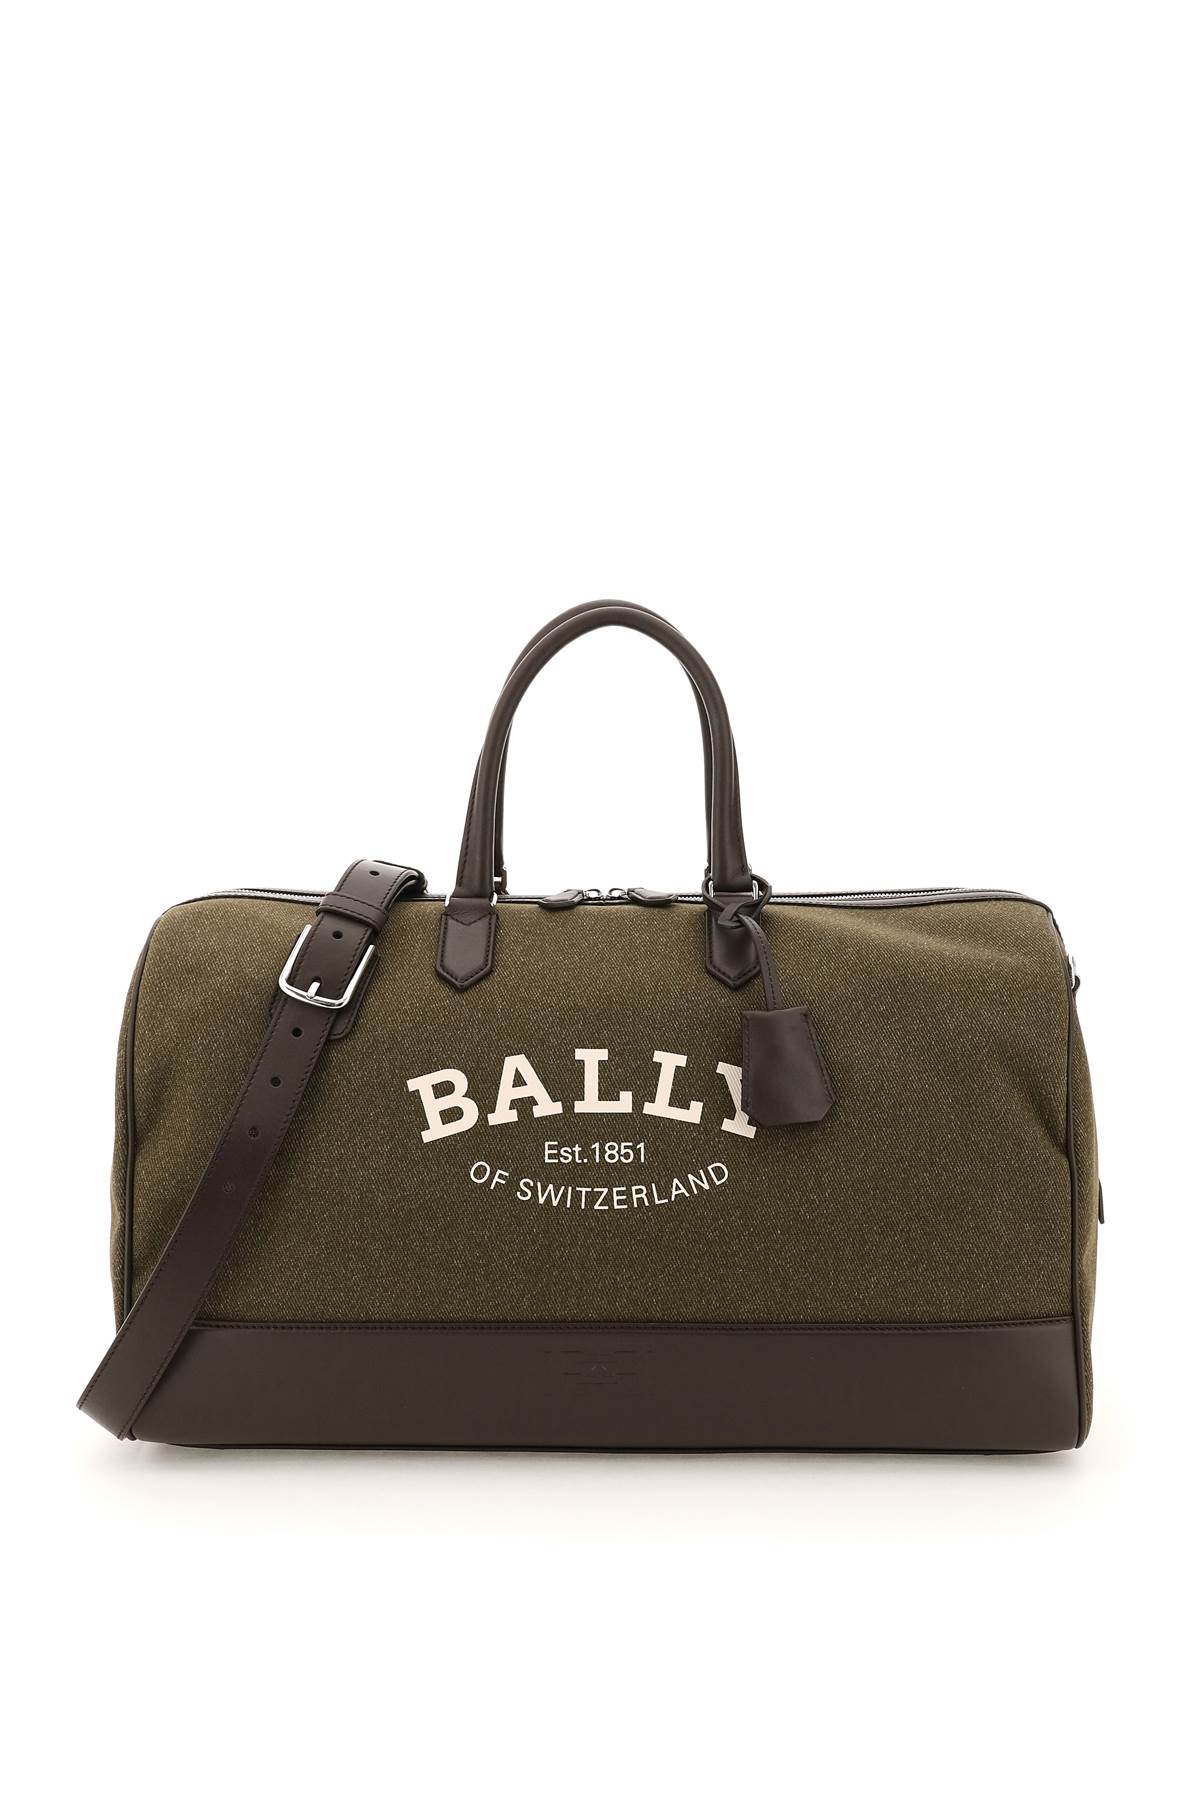 Bally Caius Weekender Bag